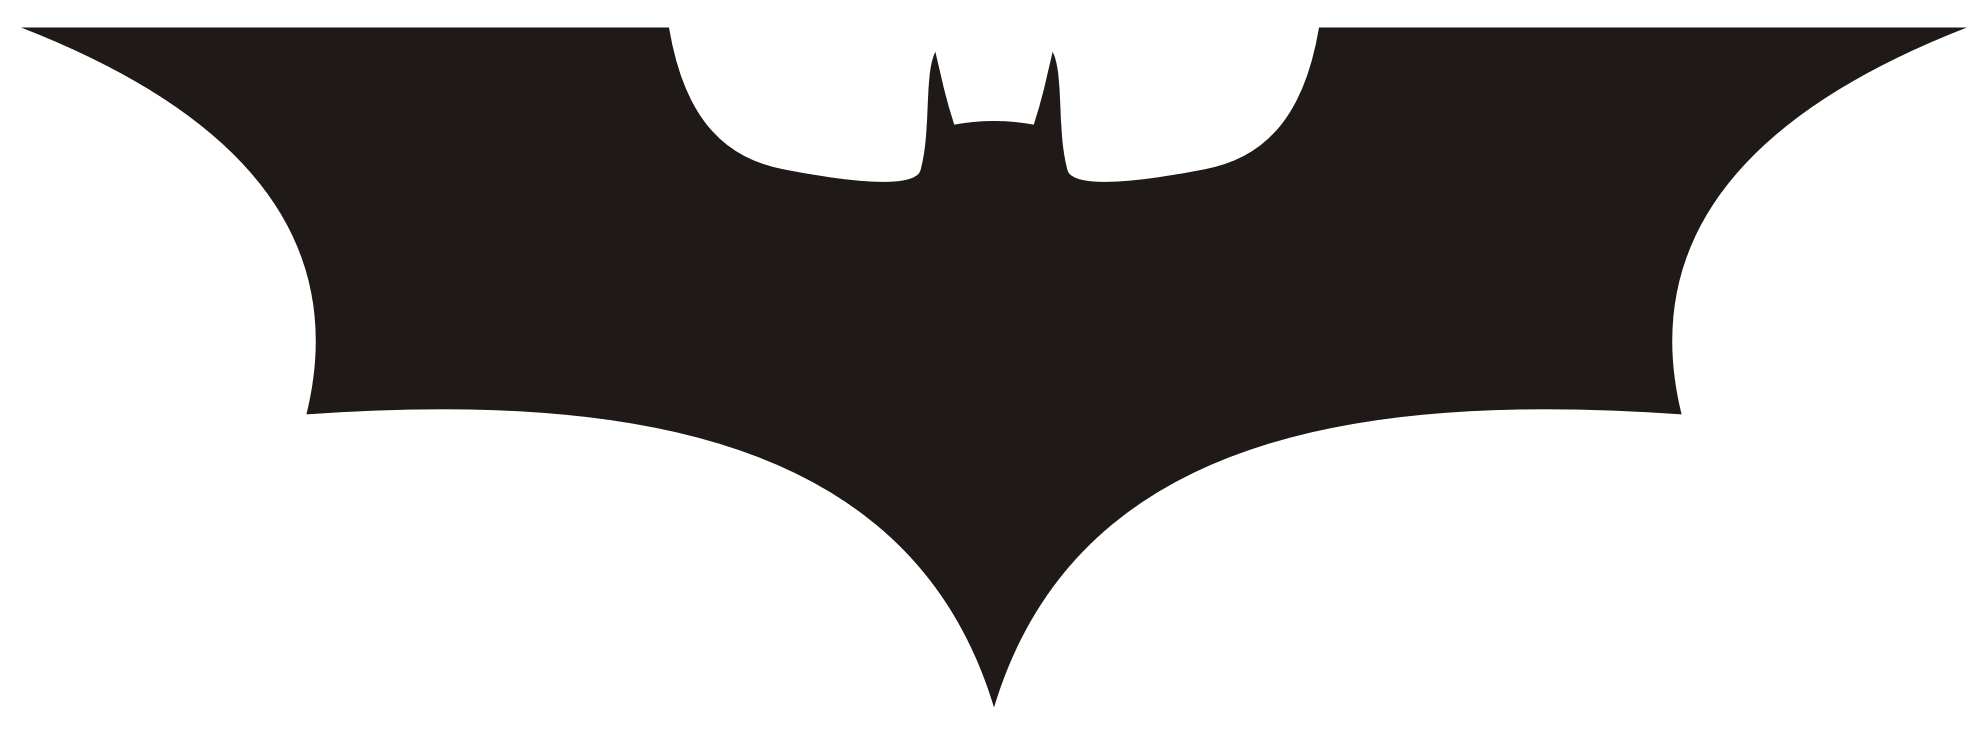 ... Free Printable Batman Logo - ClipArt Best ...